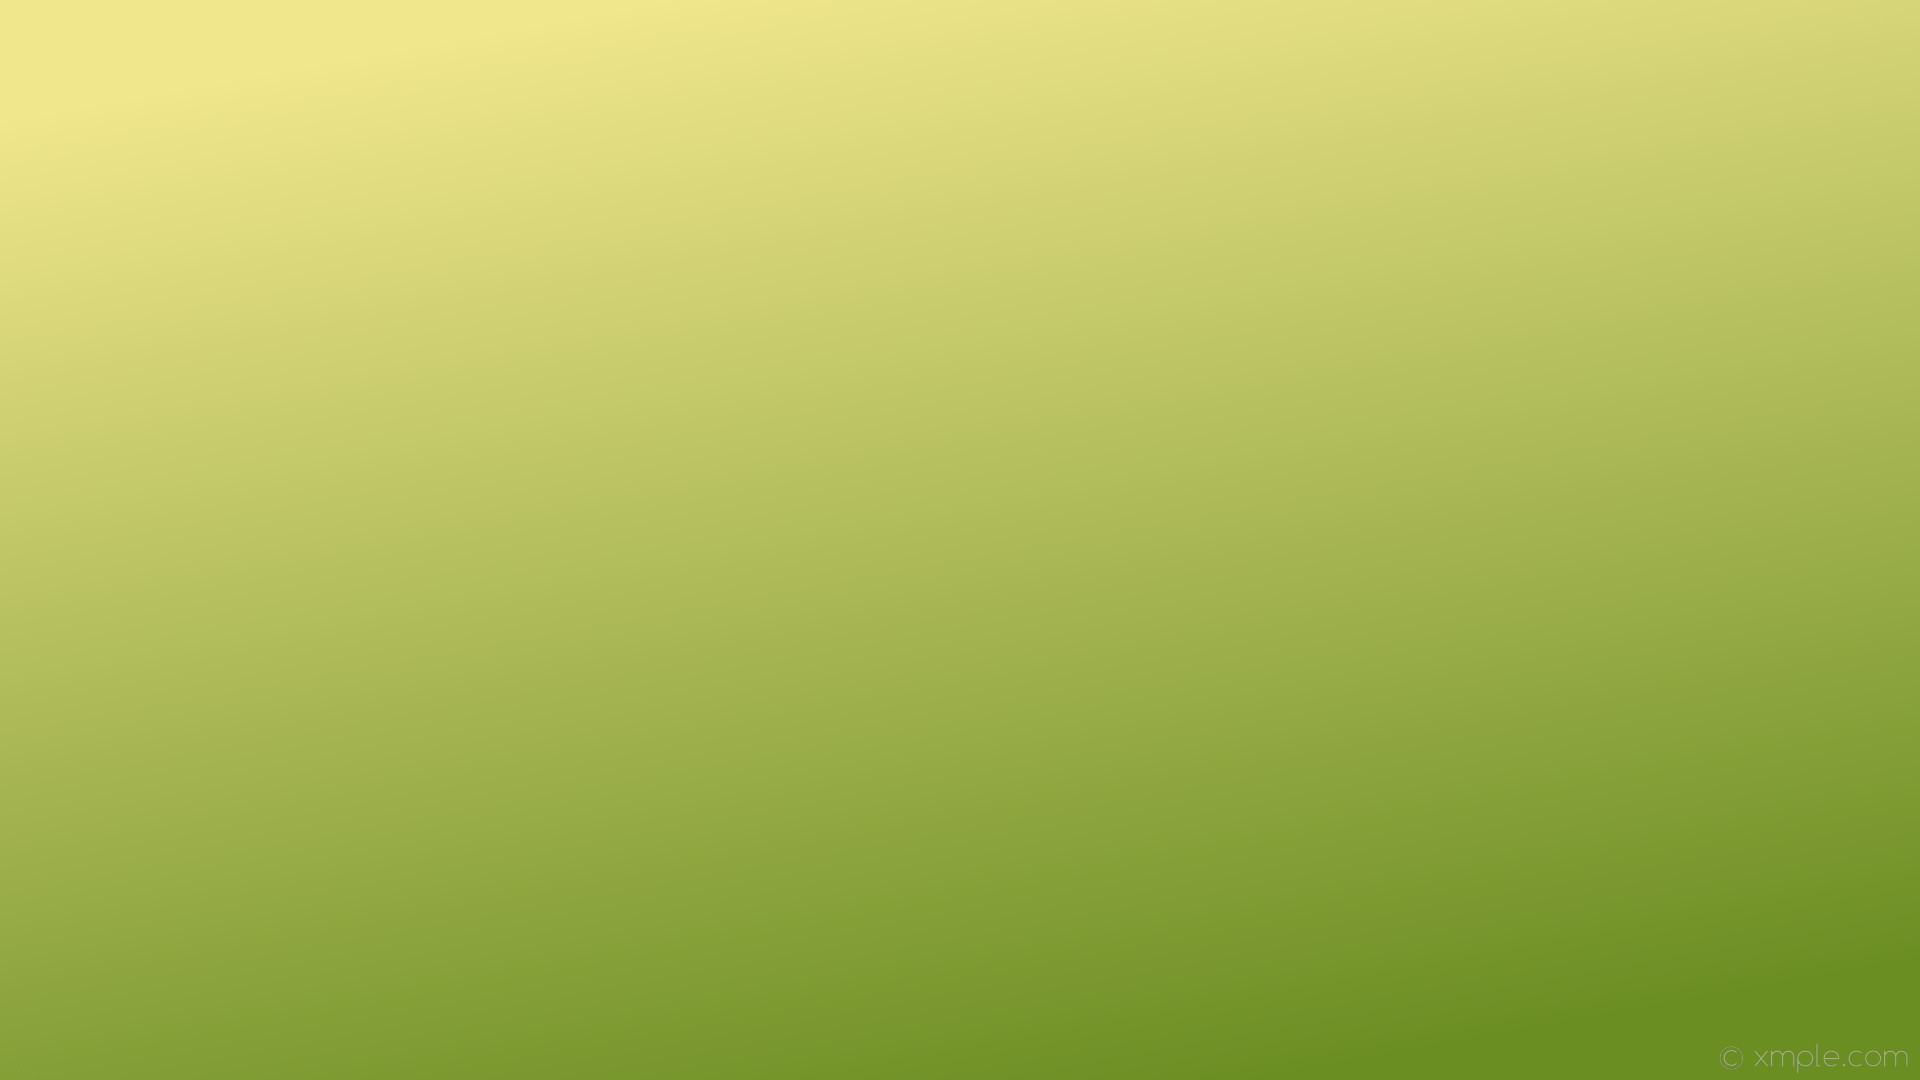 1920x1080 wallpaper linear yellow green gradient khaki olive drab #f0e68c #6b8e23 120Â°